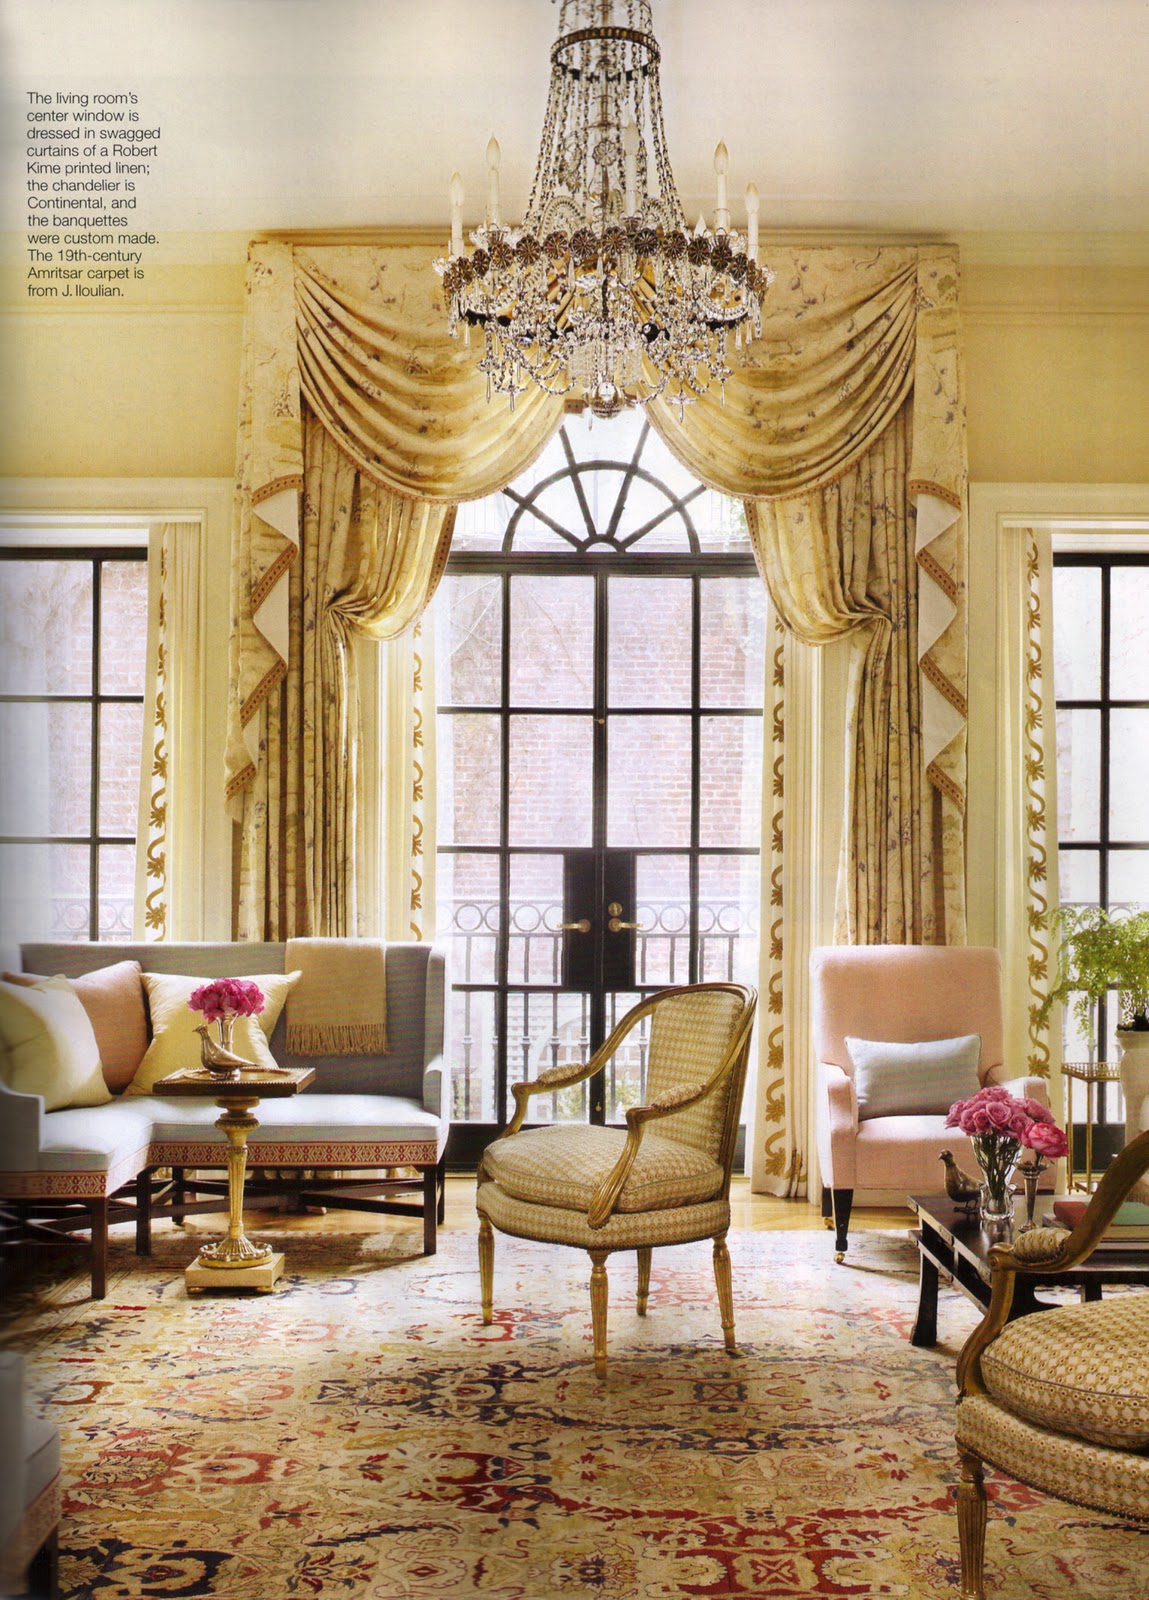 Beautiful Decor ~ Home Interior Design